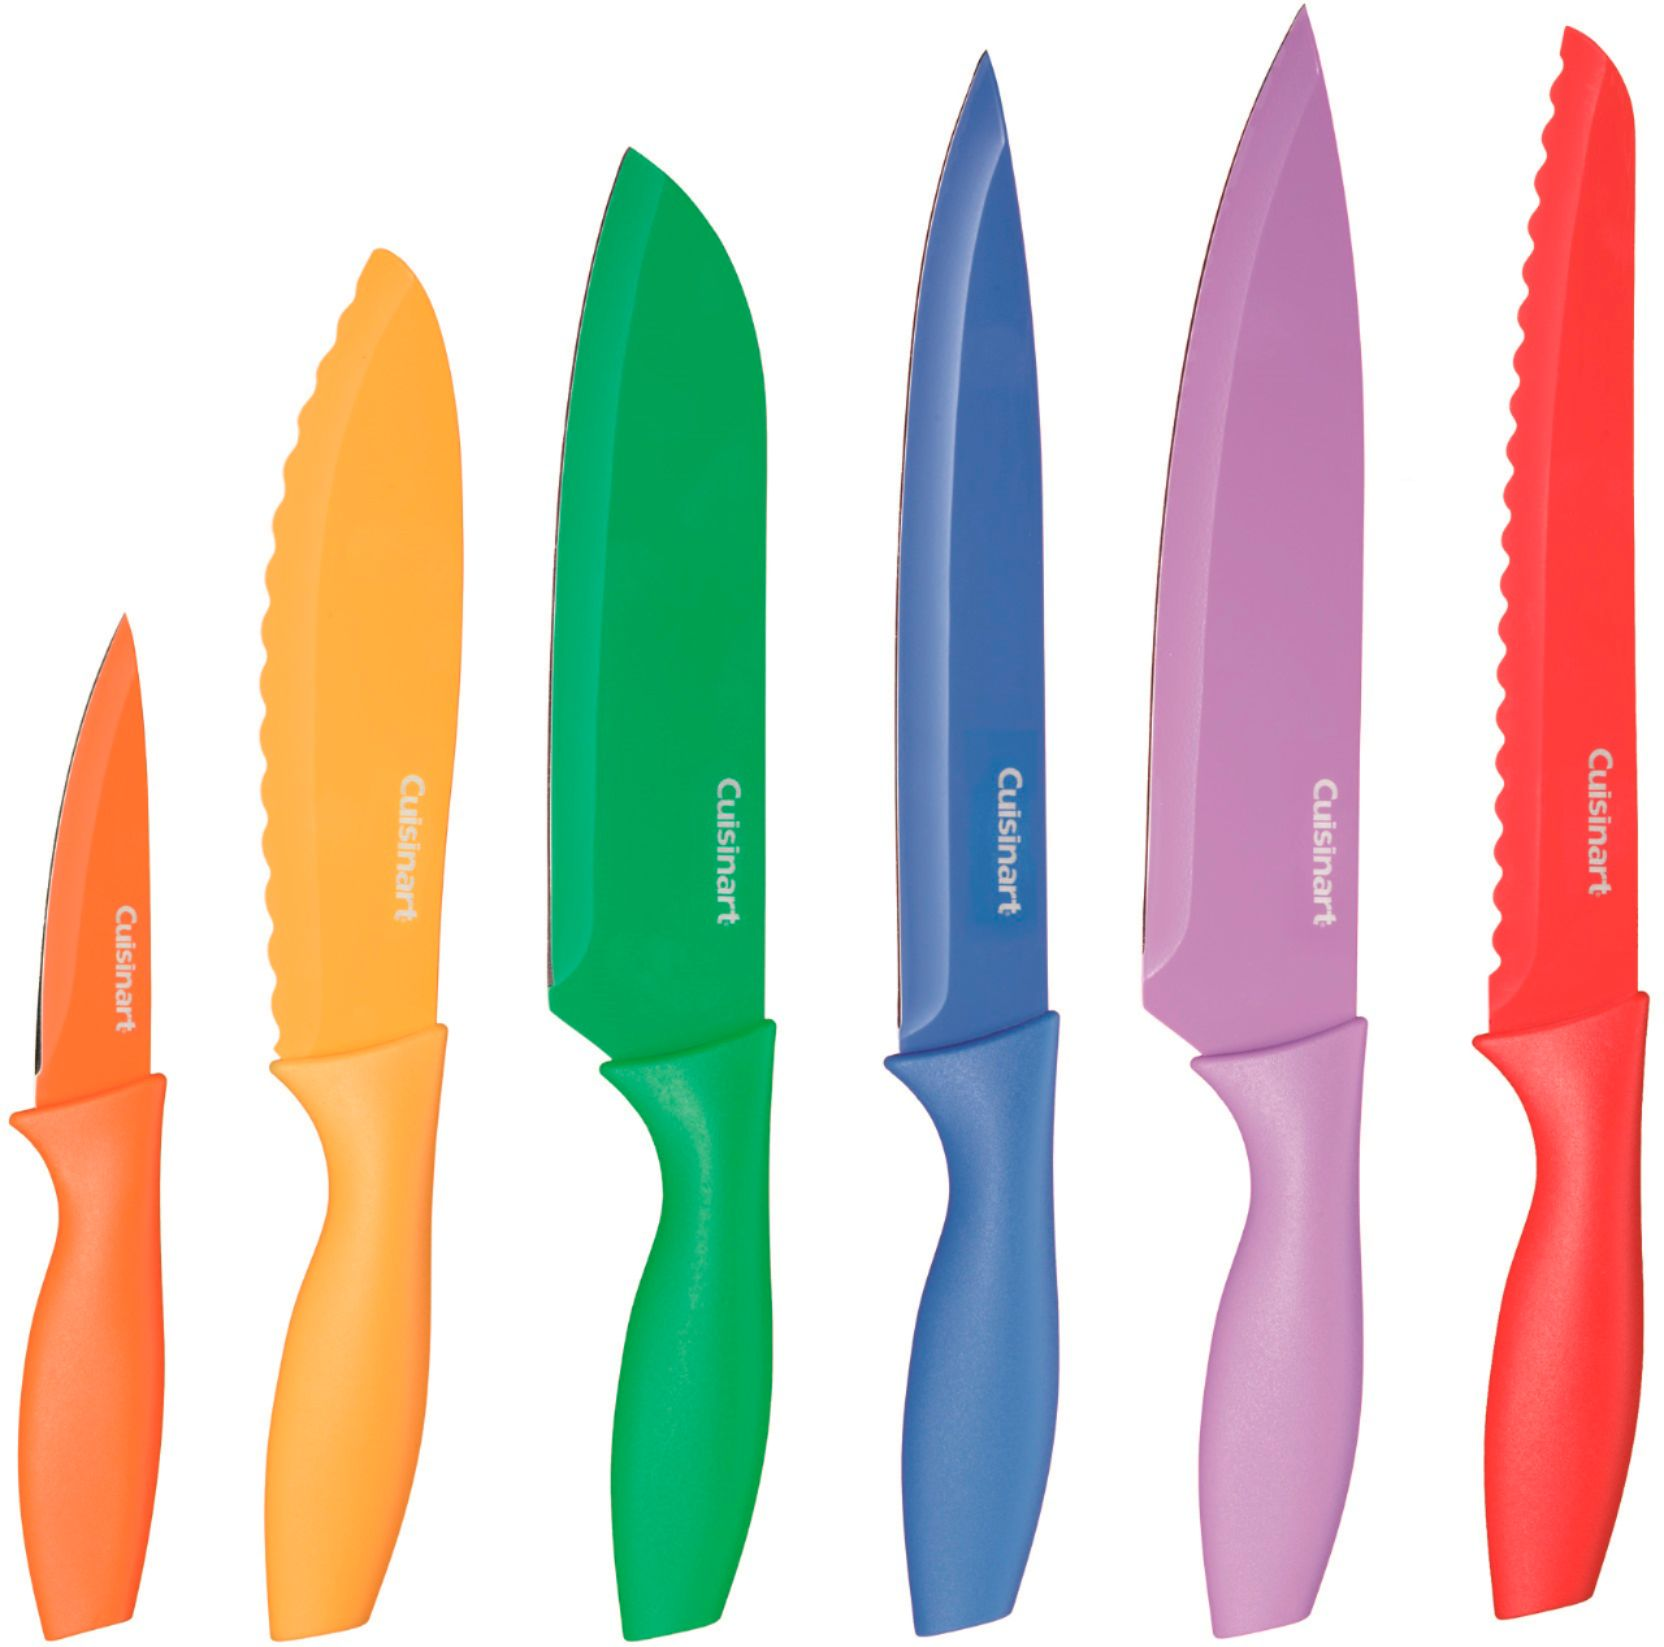 Cuisinart 6 PC Knife Set - Best Buy $14.99